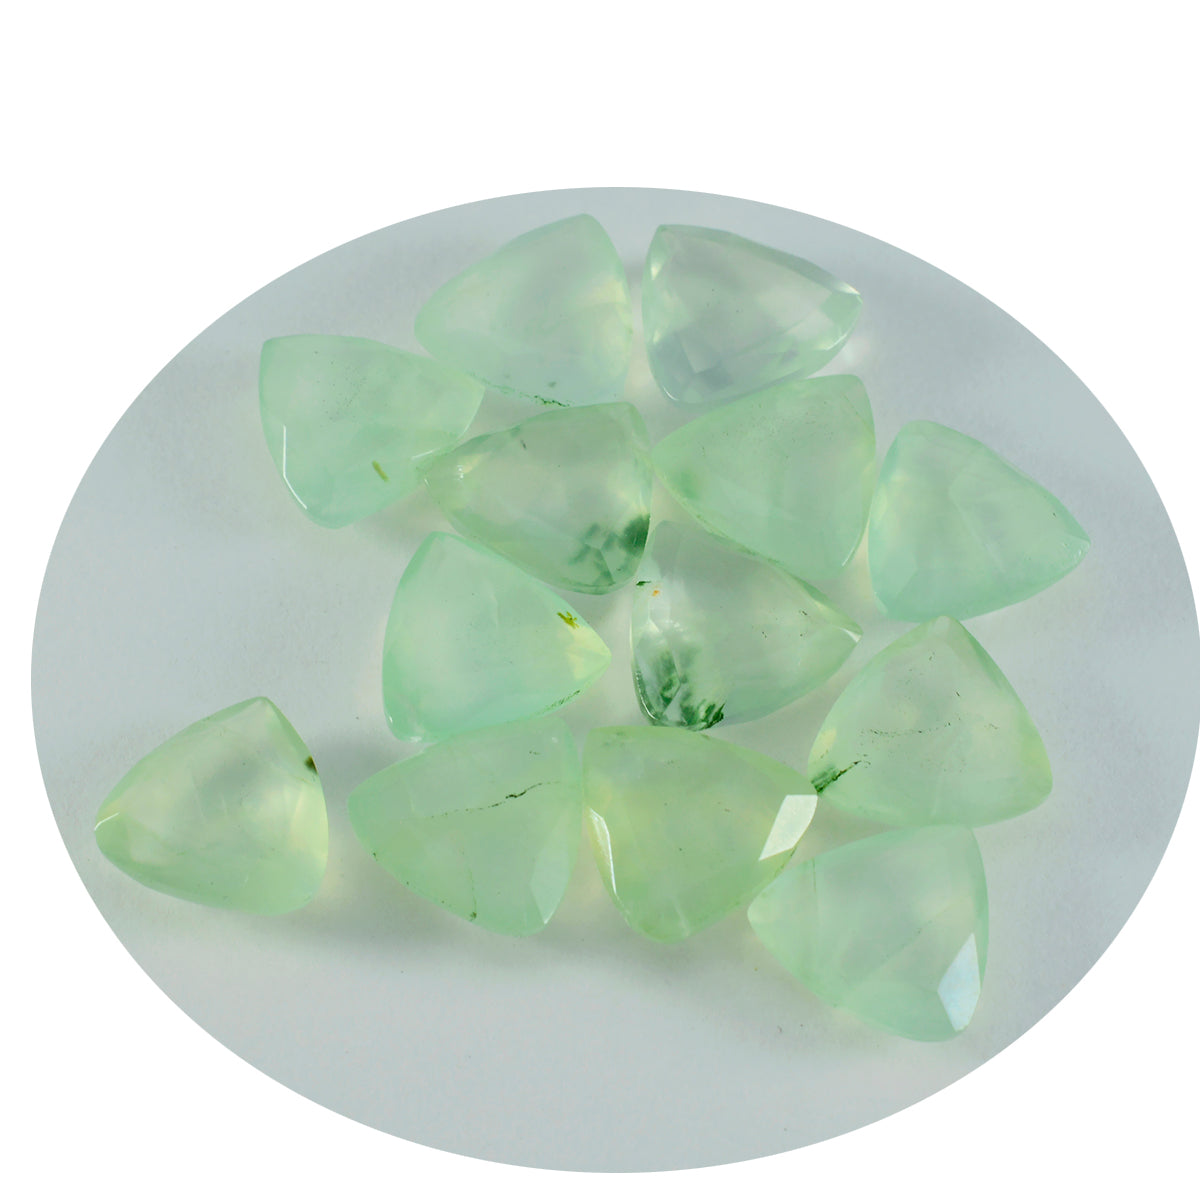 Riyogems 1PC Green Prehnite Faceted 5x5 mm Trillion Shape wonderful Quality Loose Gems